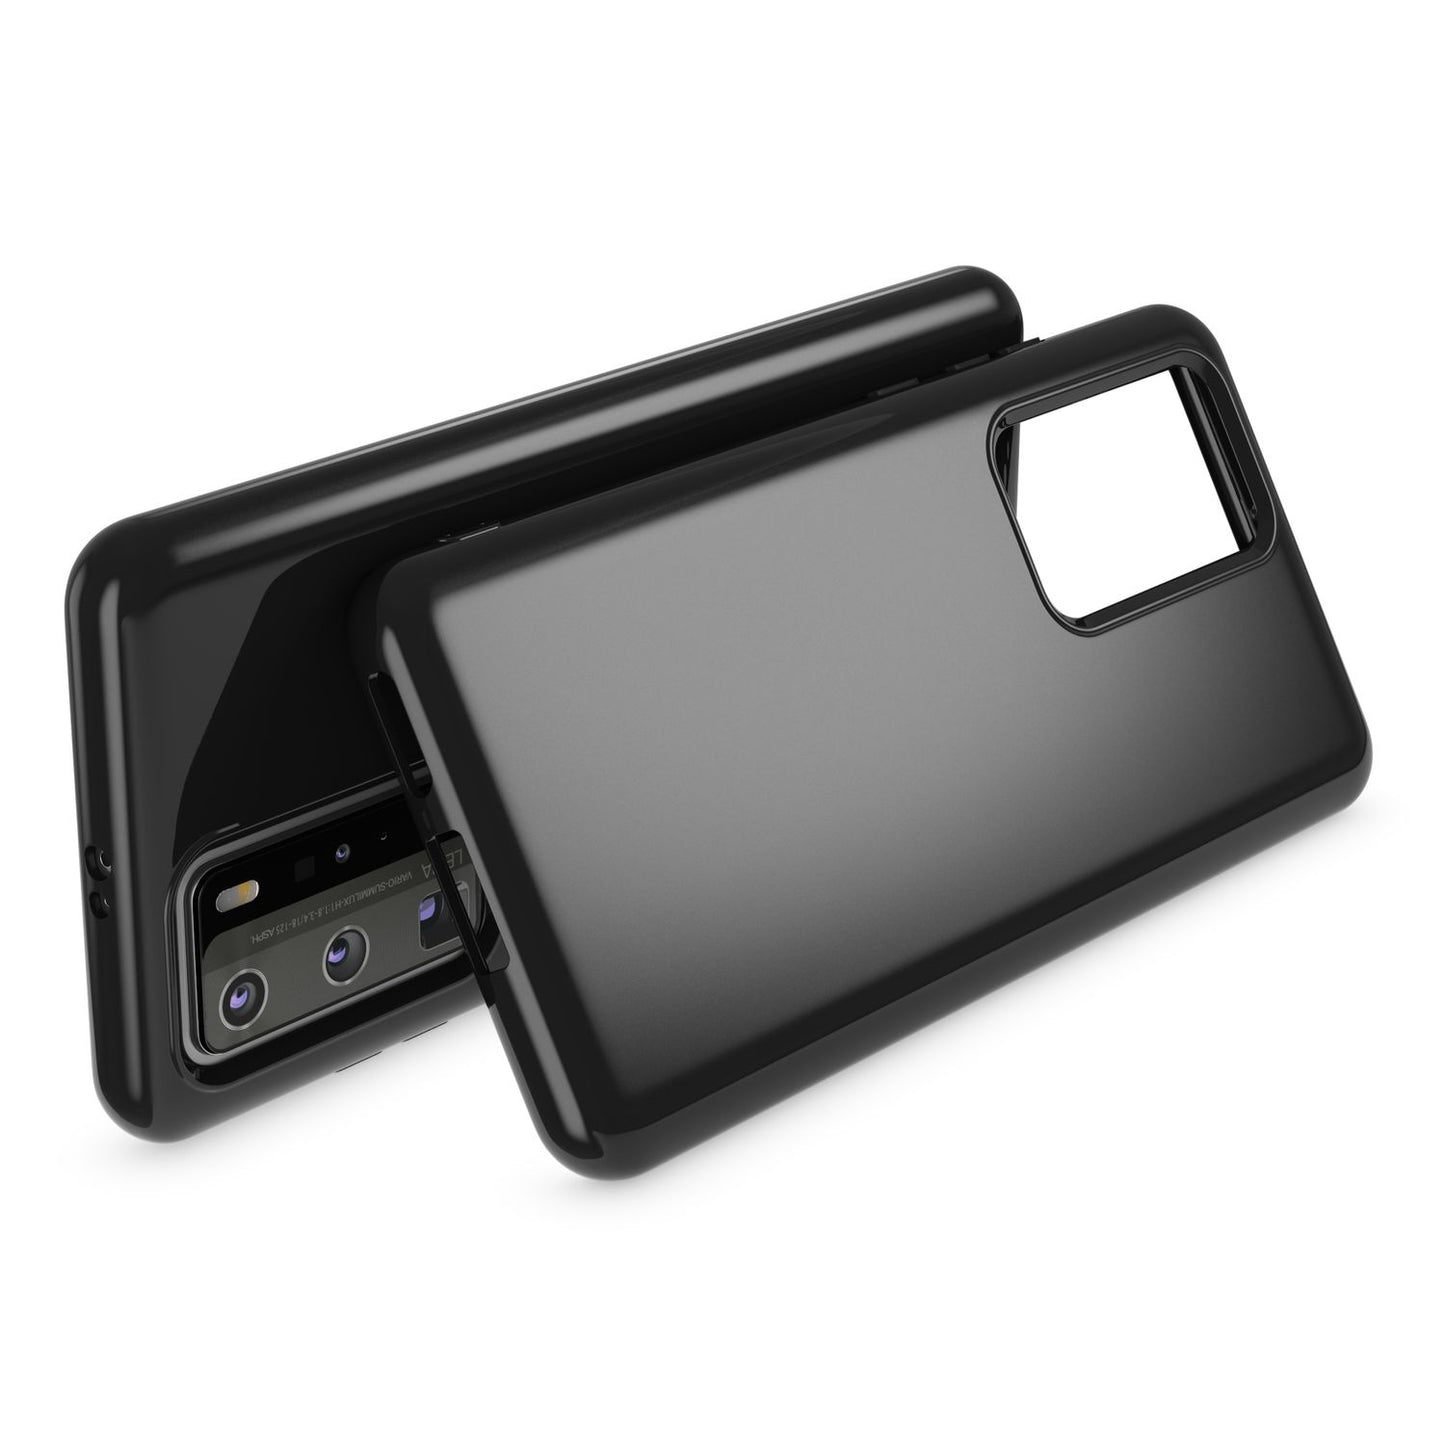 NALIA Handy Hülle für Huawei P40 Pro, Slim Case Silikon Schutzhülle Cover Bumper